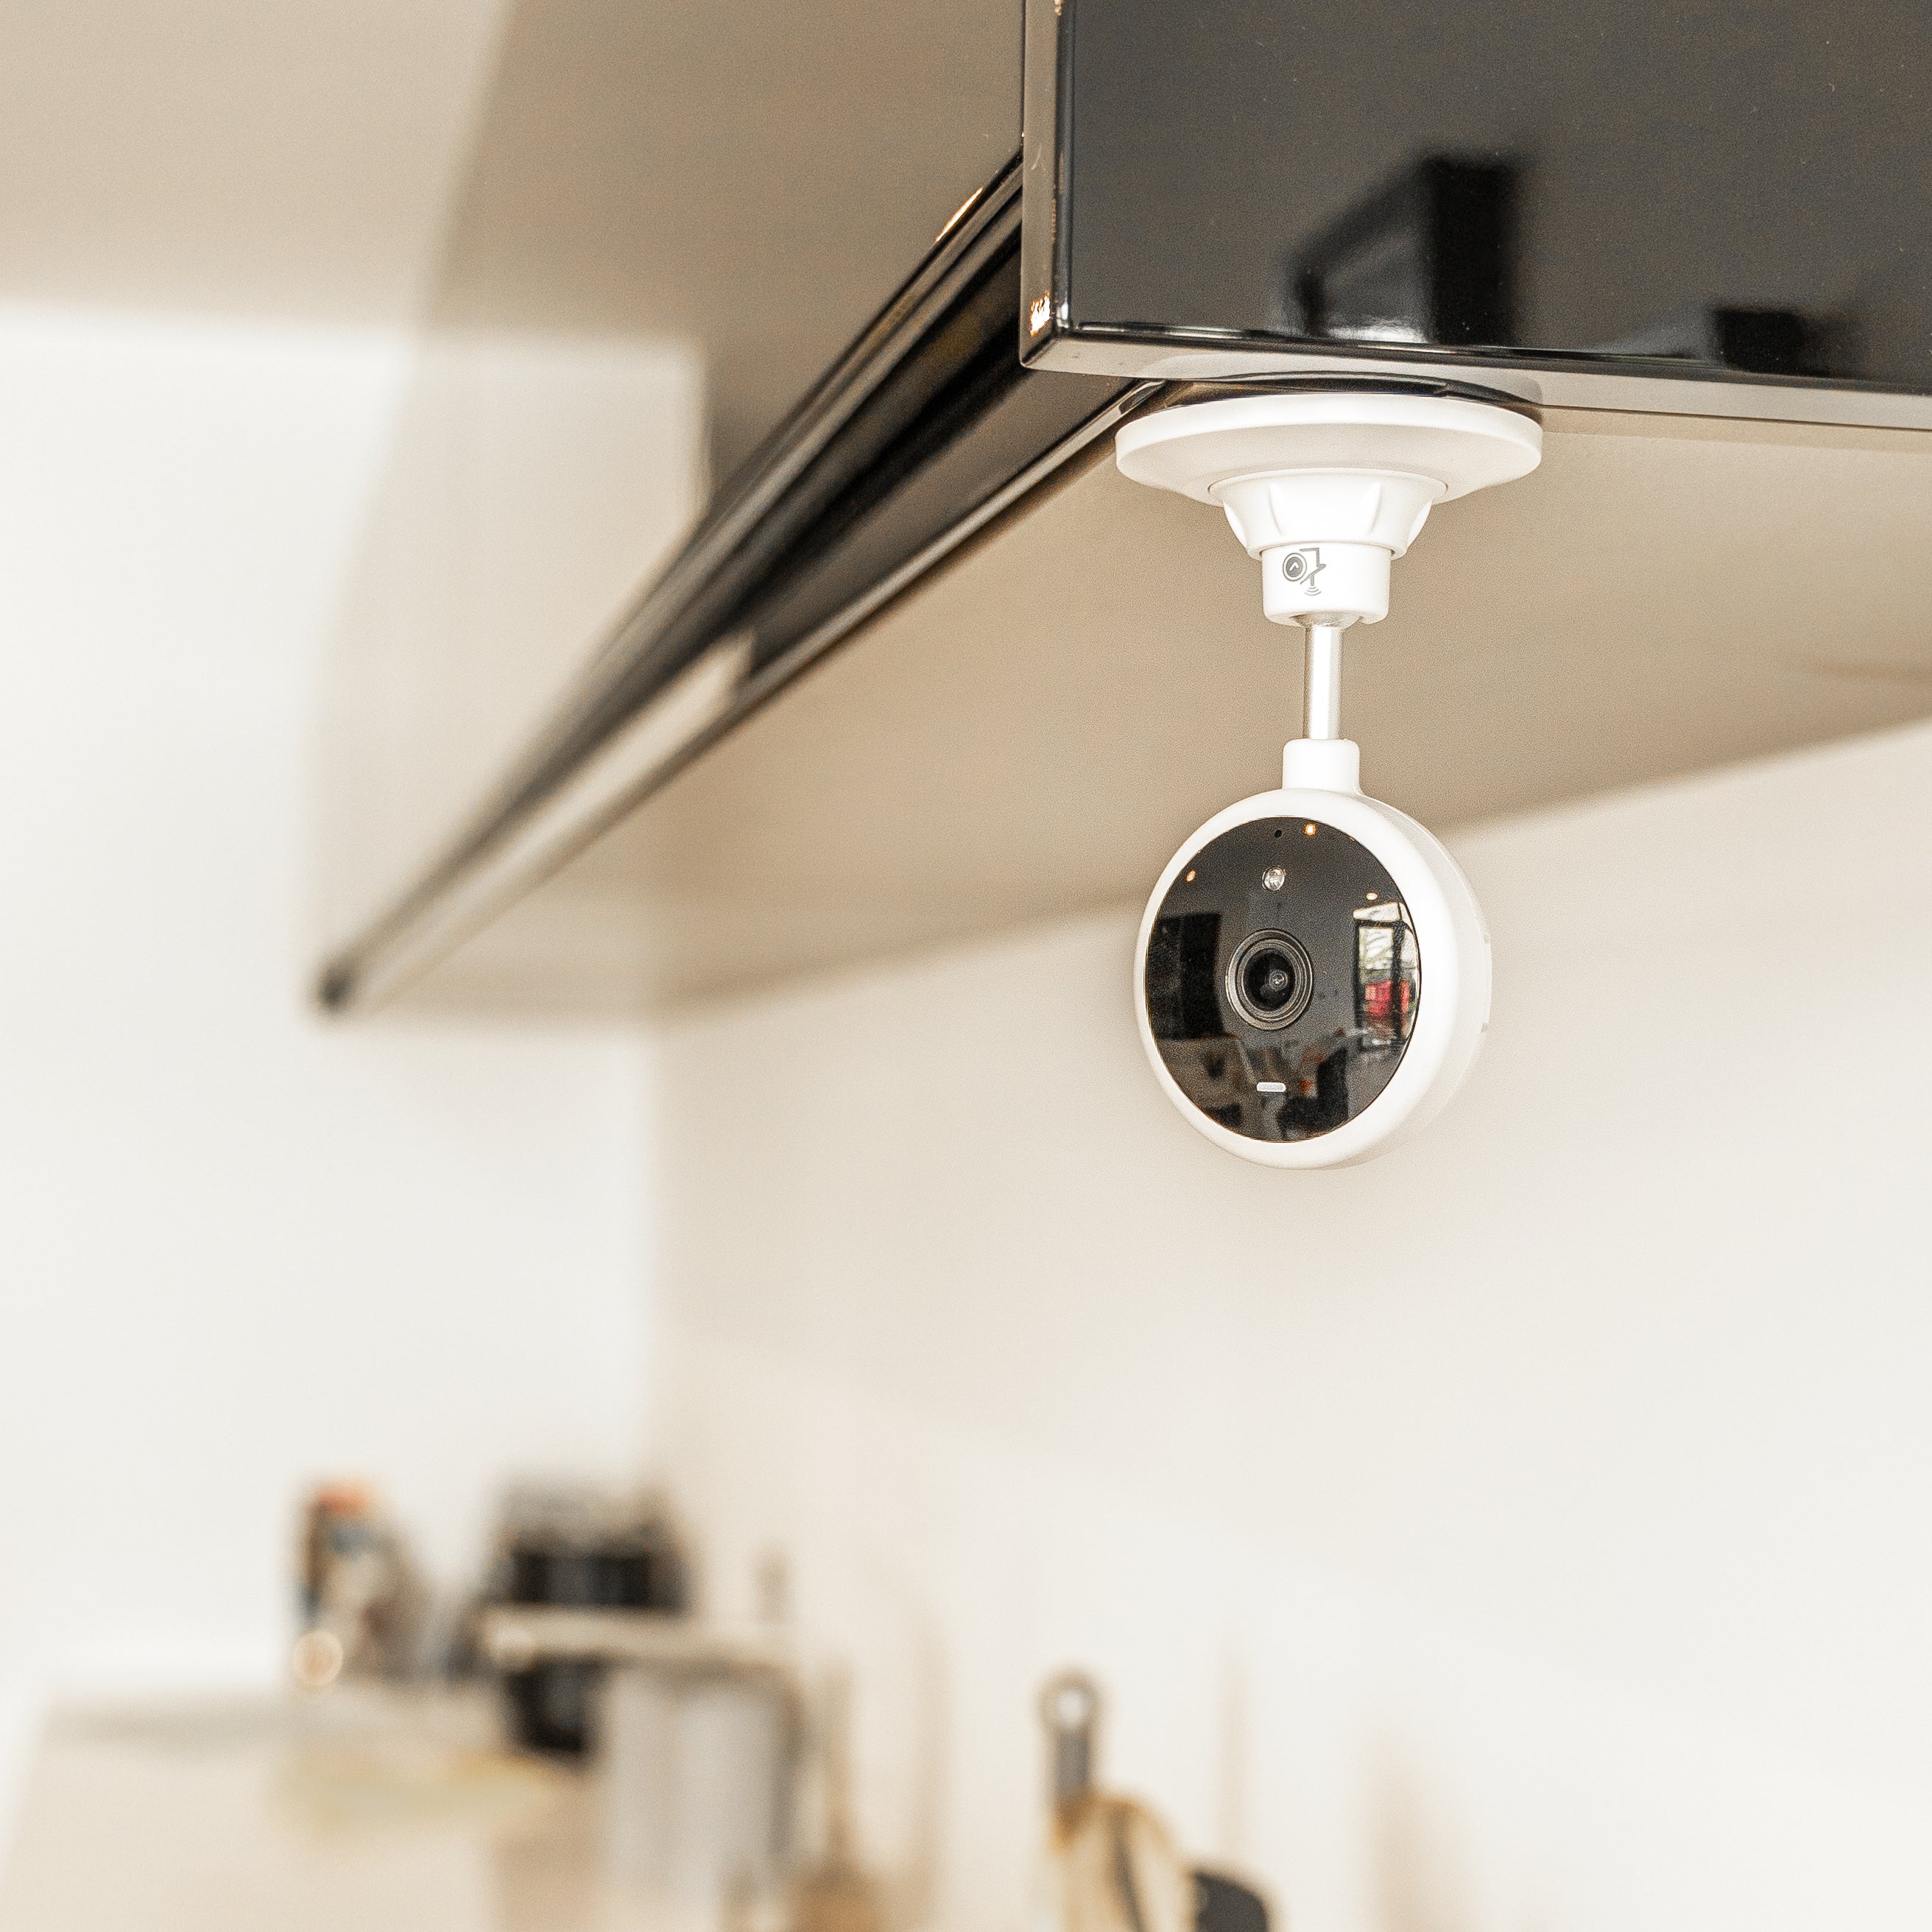 HomeOK smart home camera mounted on a cupboard